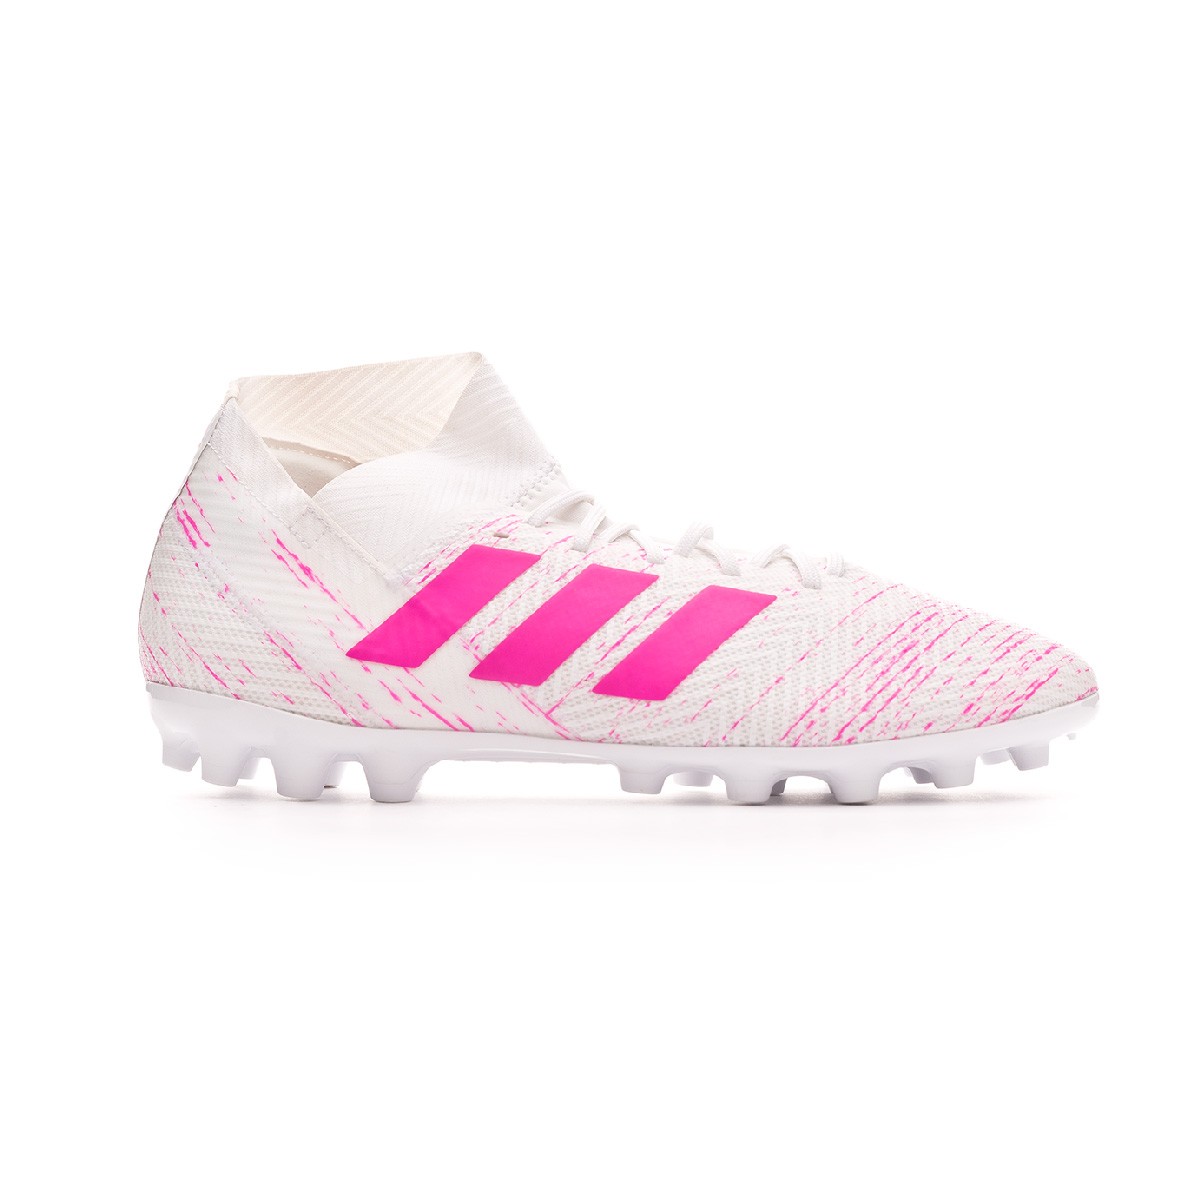 Zapatos de fútbol adidas Nemeziz 18.3 AG White-Shock pink - Tienda de  fútbol Fútbol Emotion